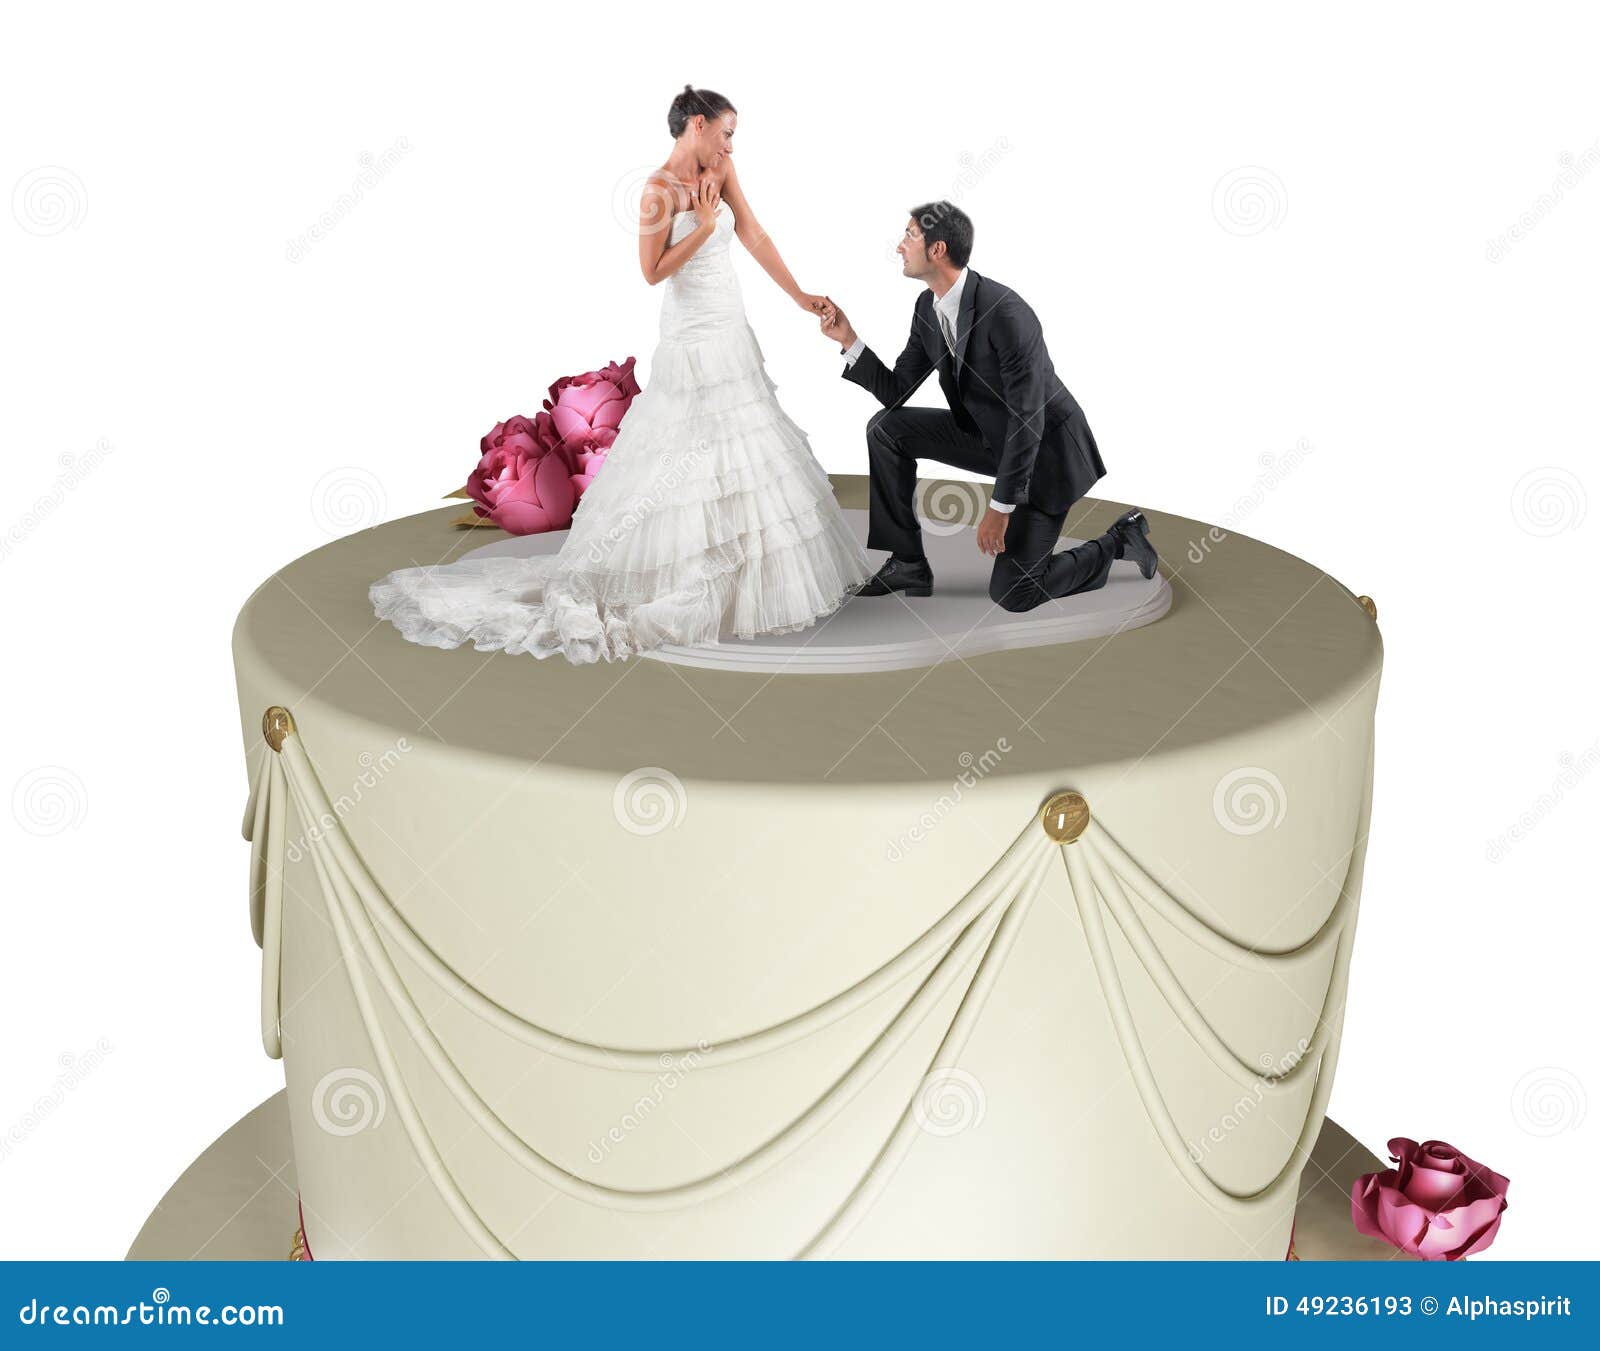 Funny wedding cake stock image. Image of pleasure, dress - 49236193